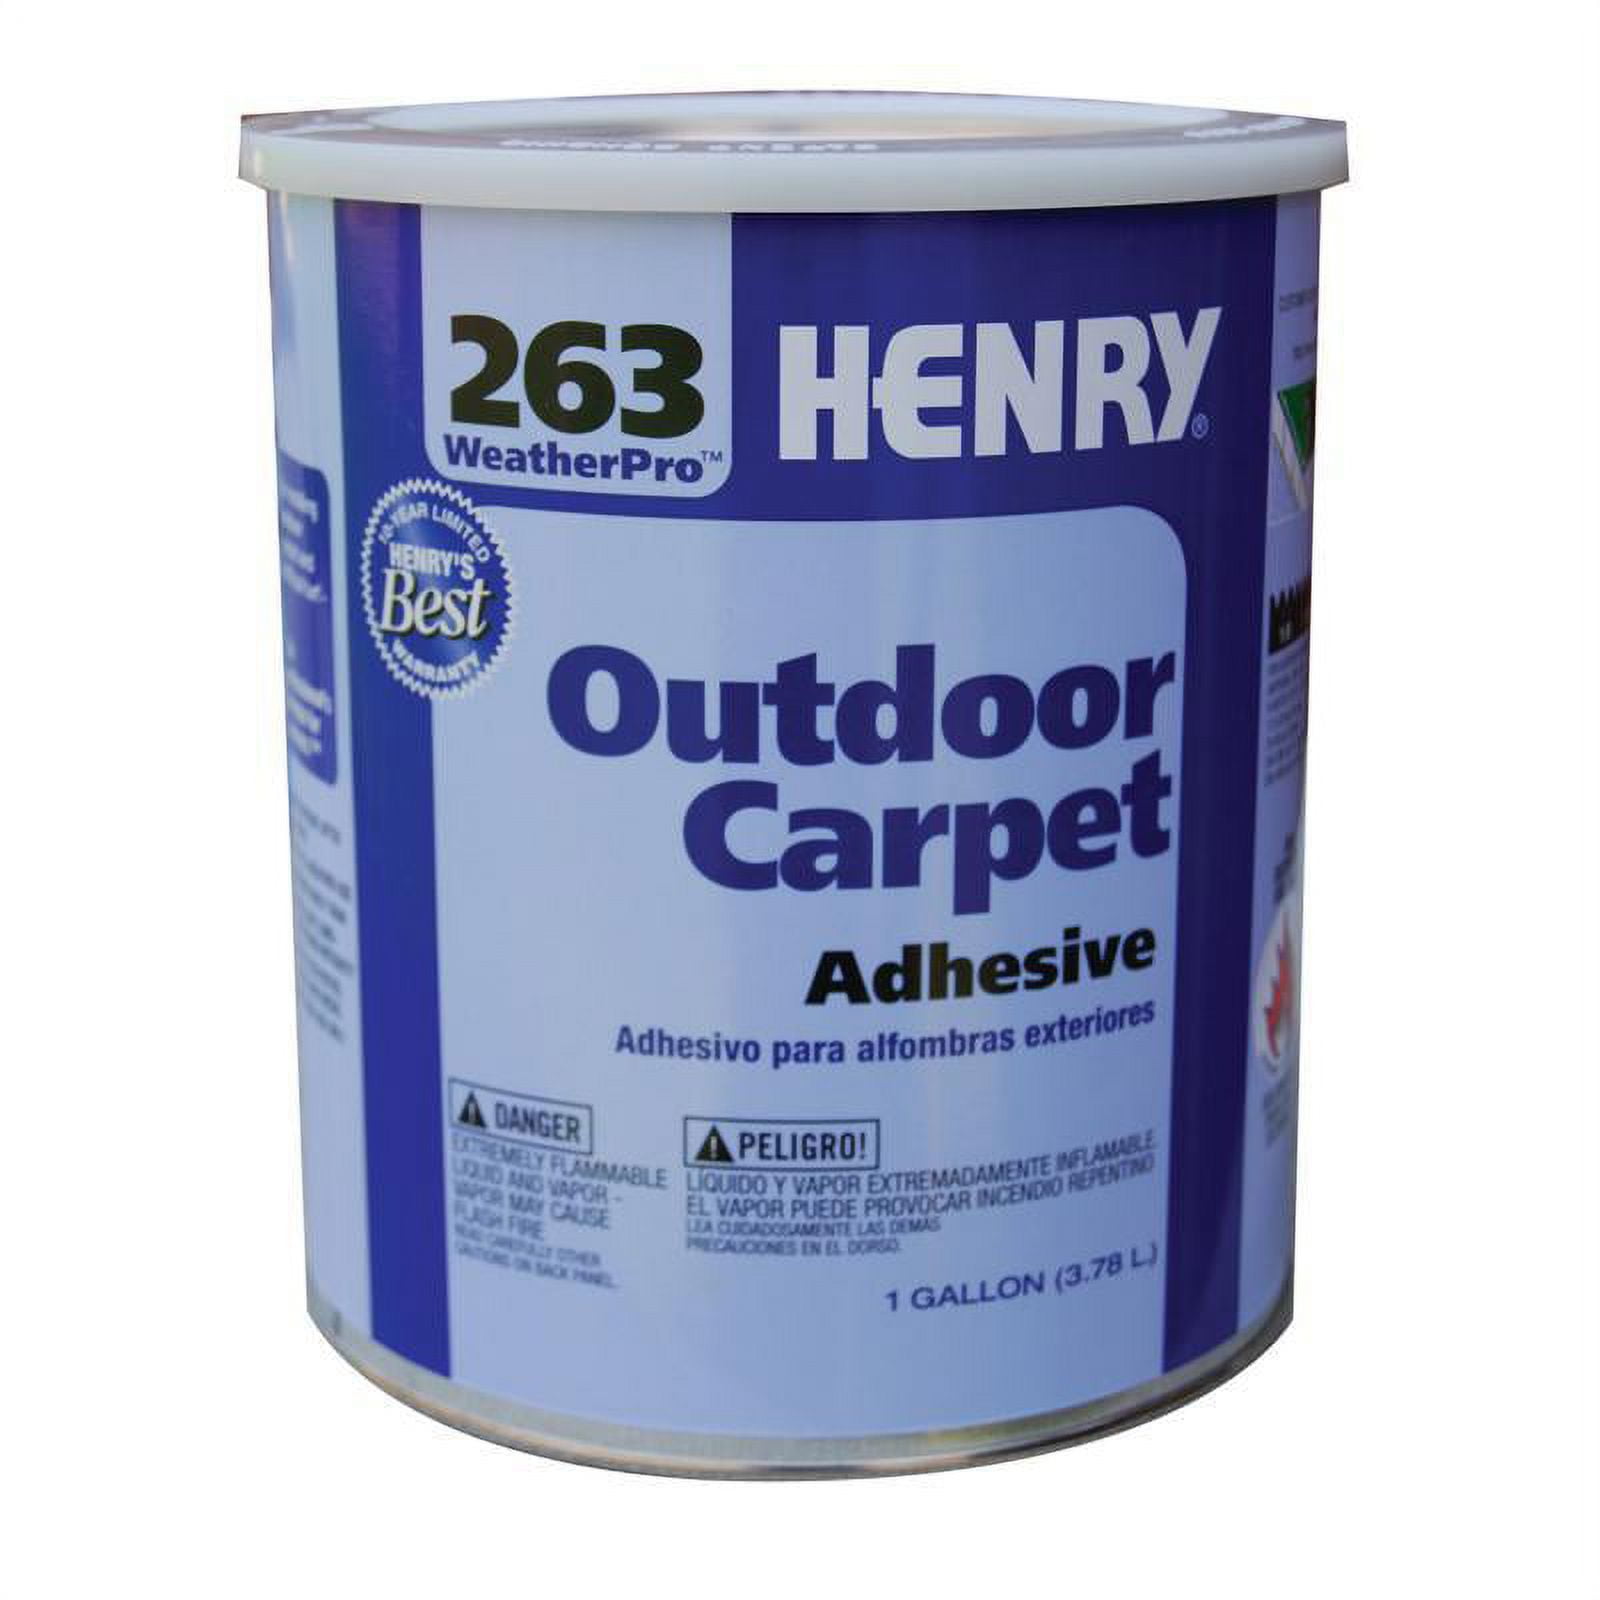 Professional Boat Carpet Adhesive - 1 Gallon Pail